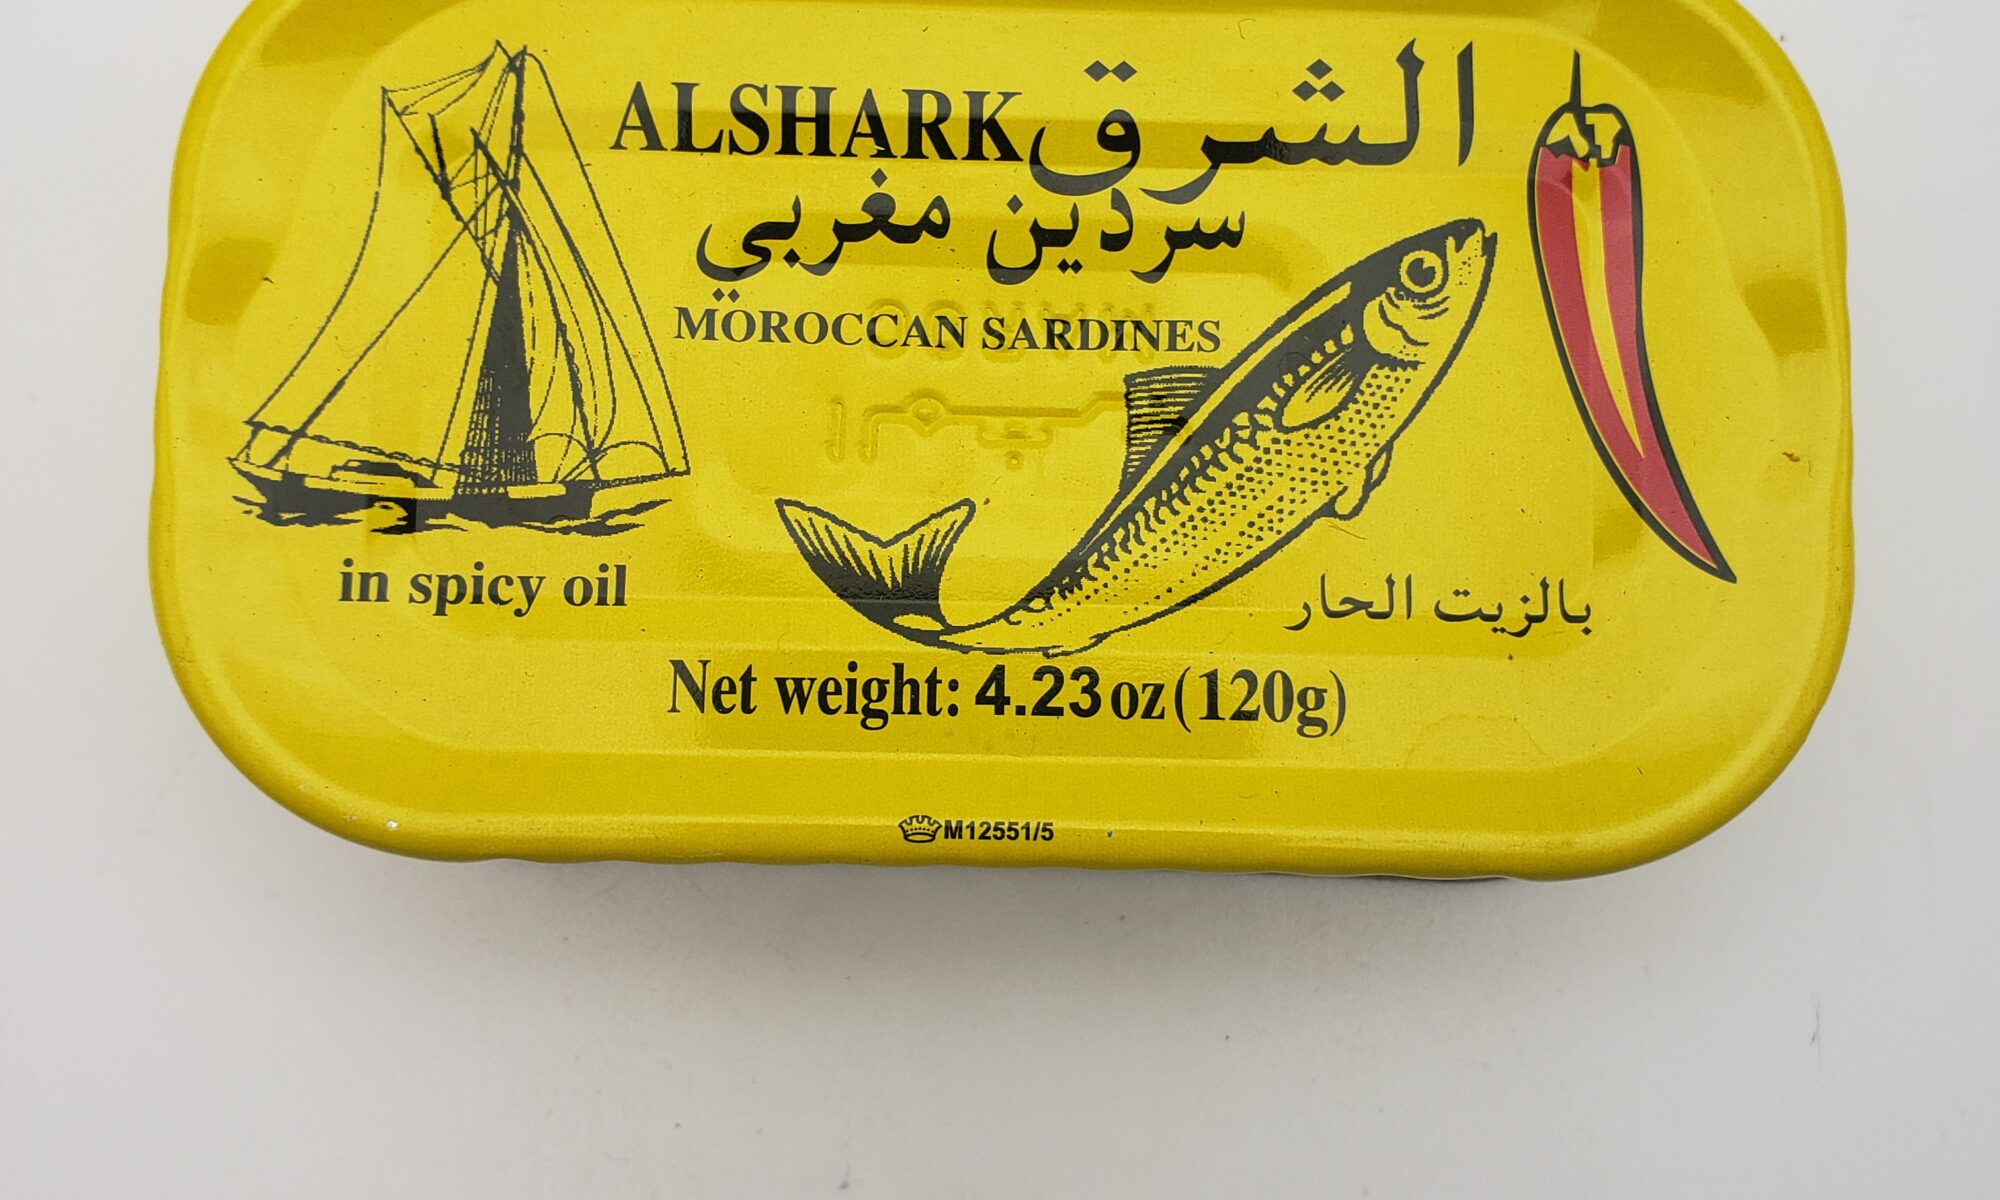 Image of Alshark spicy sardines tin